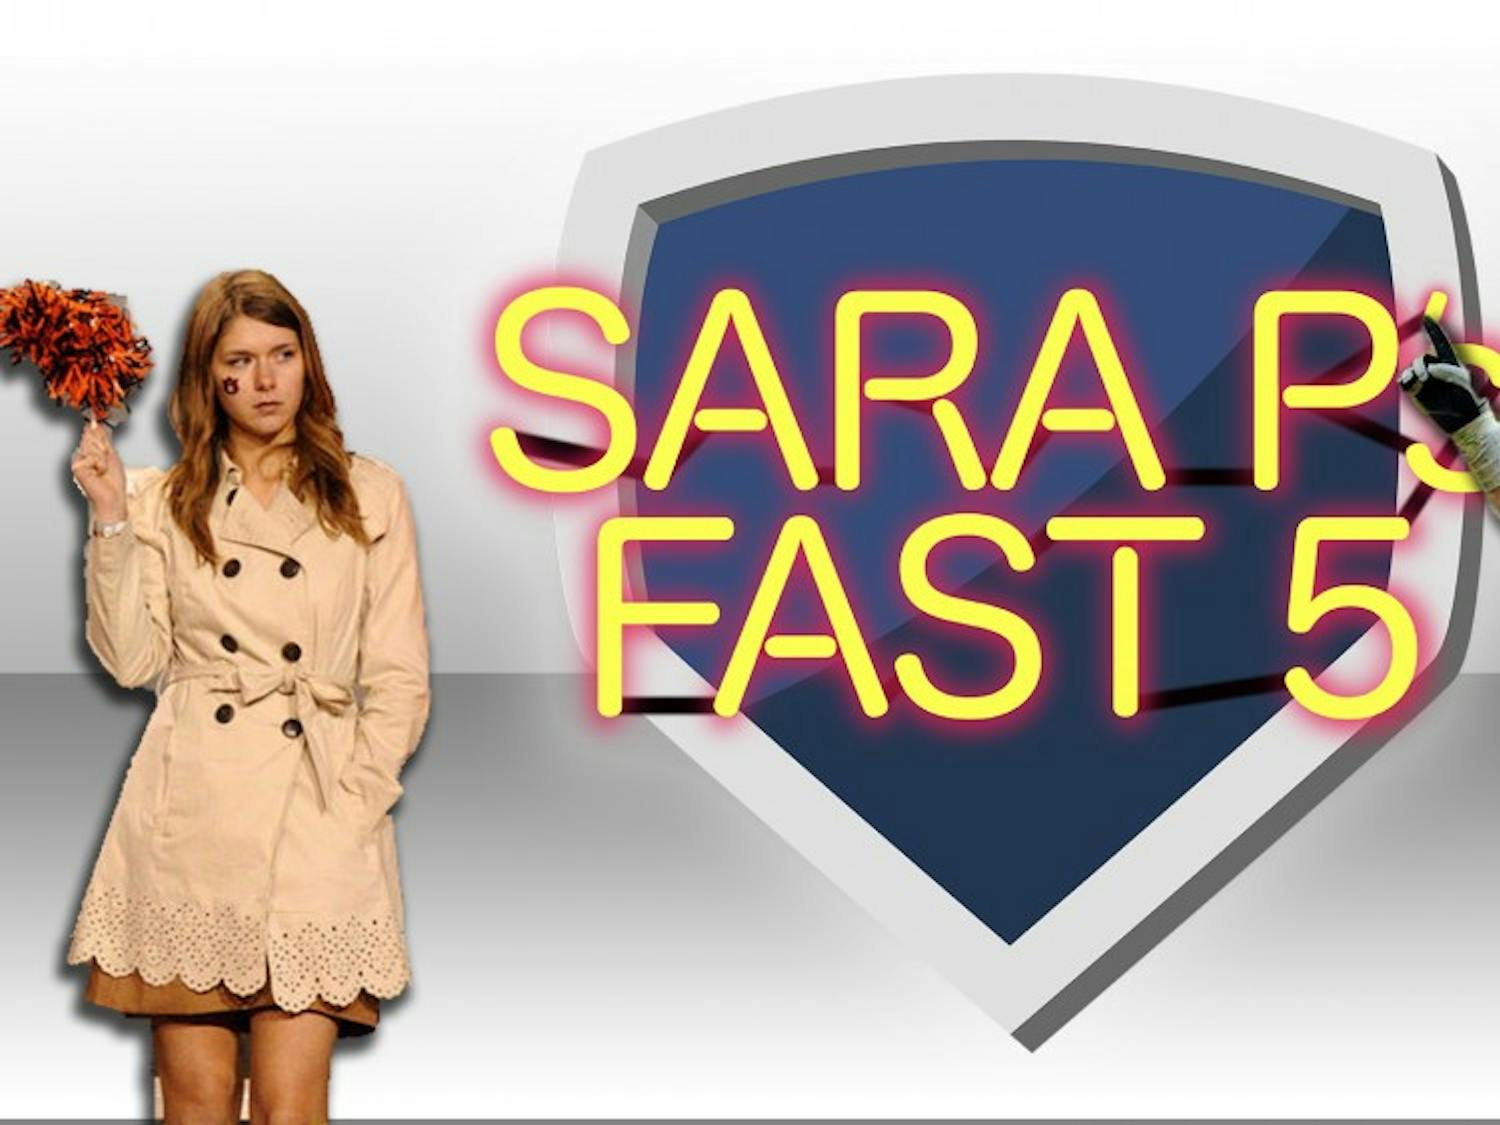 Sara P's Fast 5: Auburn loses to LSU